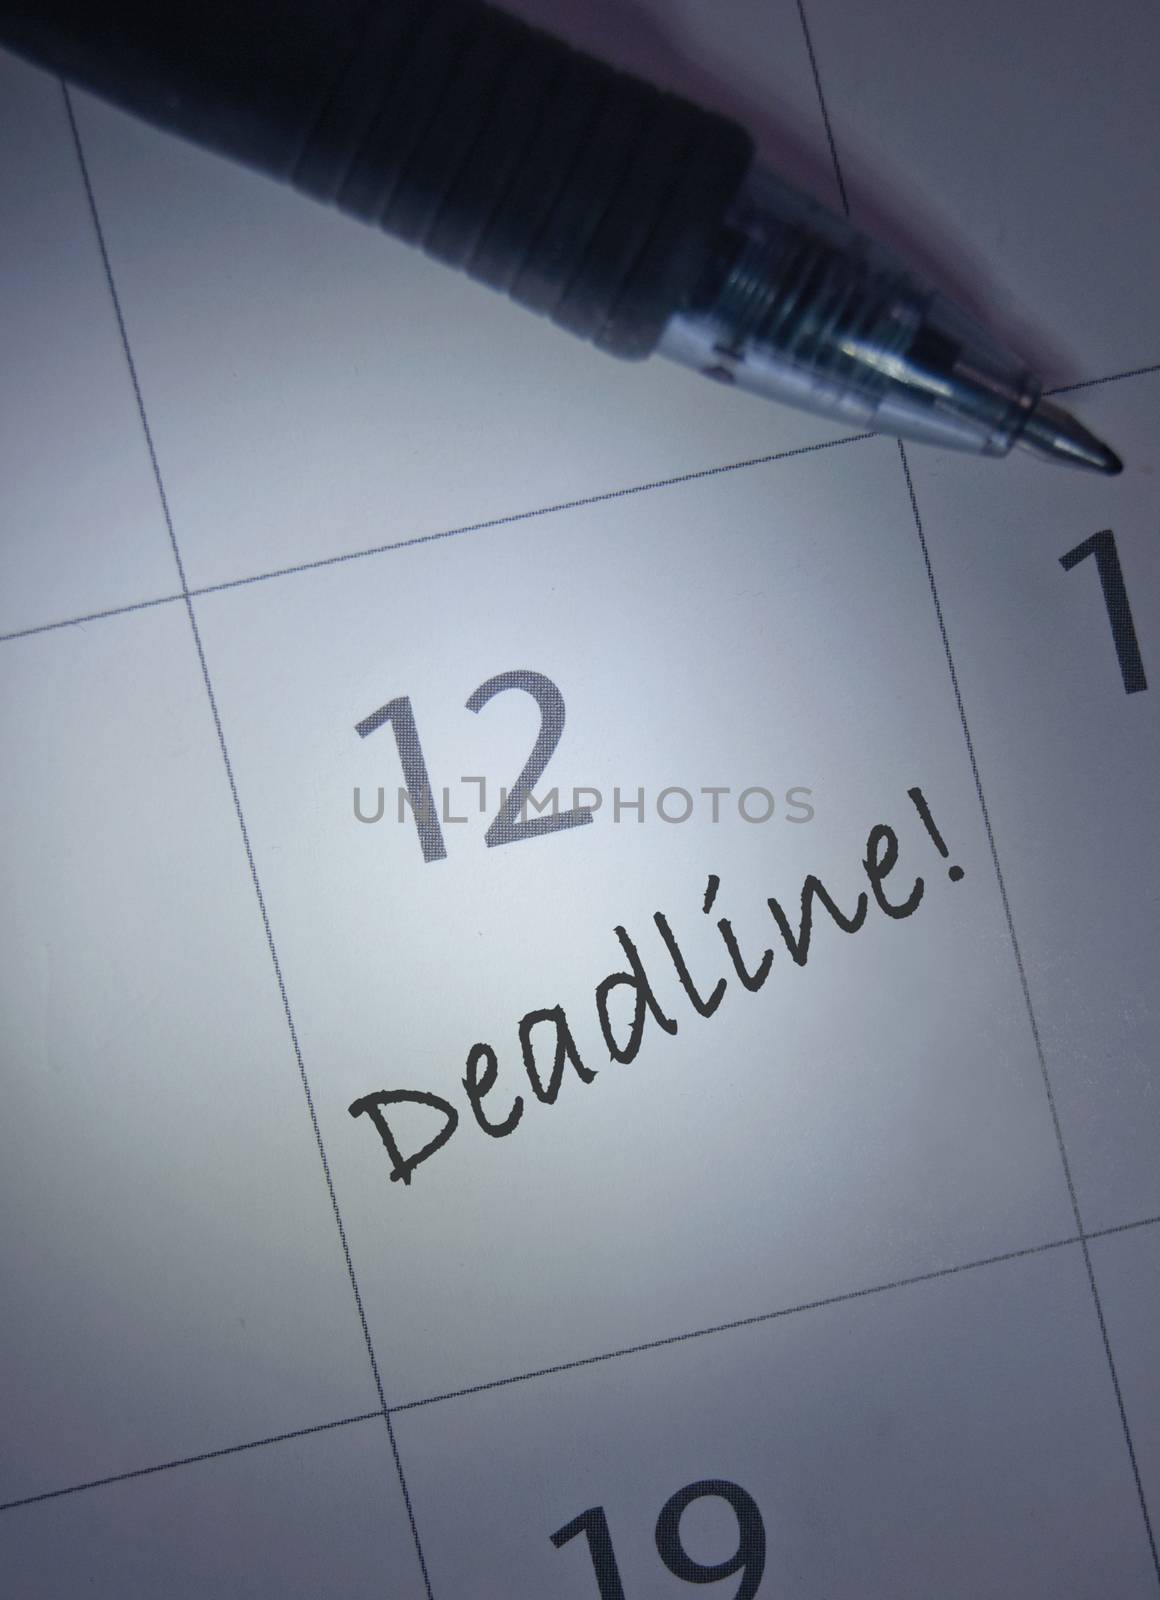 Calendar entry with deadline reminder 